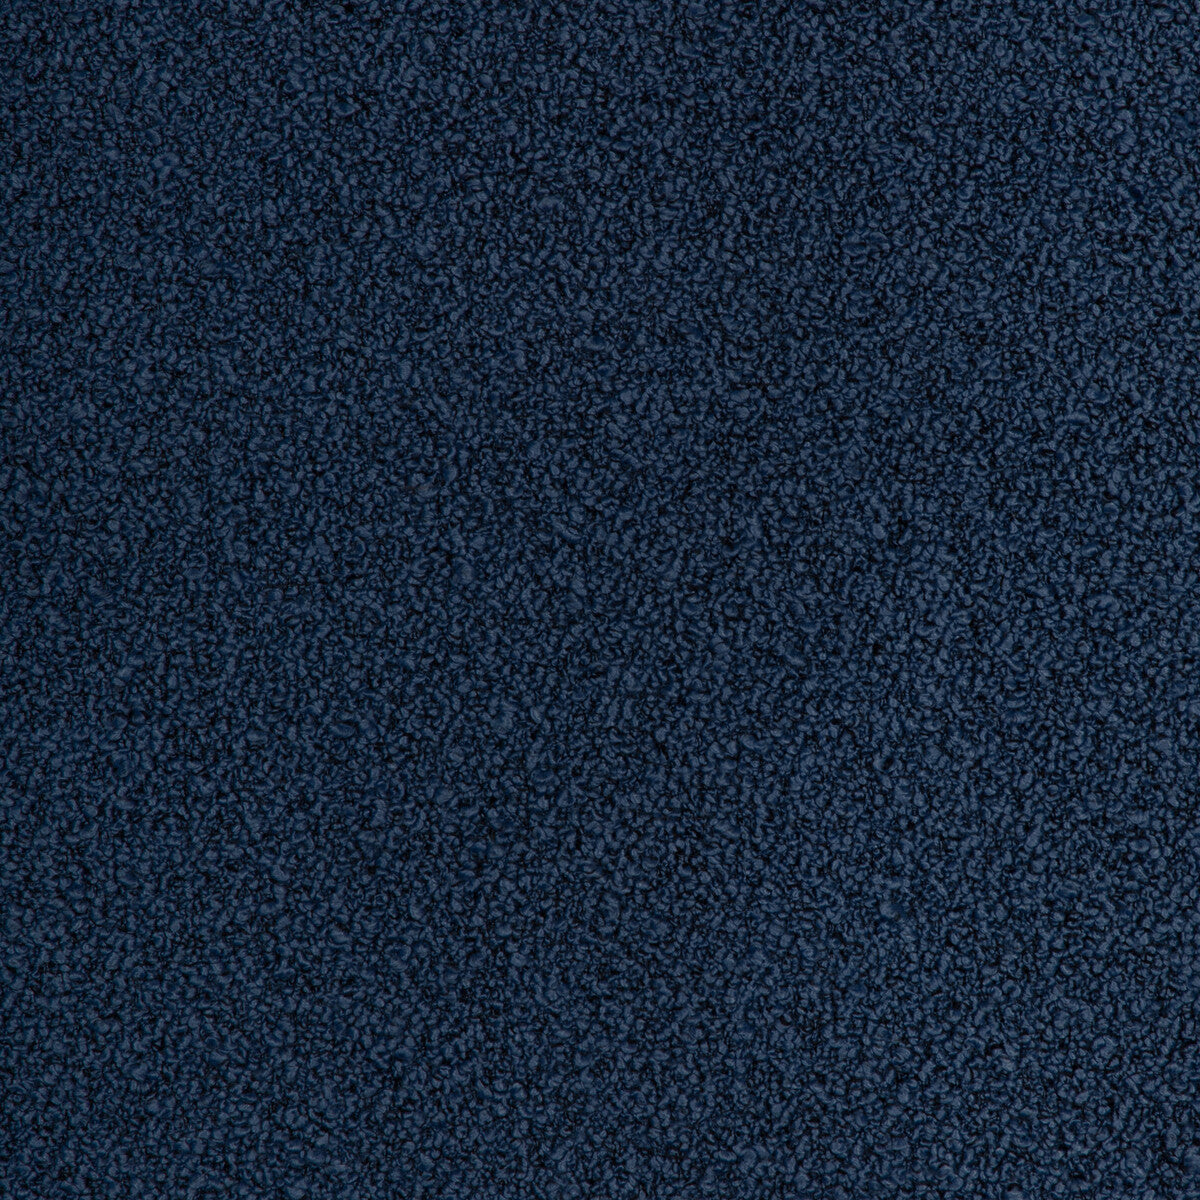 Kravet Smart fabric in 37093-505 color - pattern 37093.505.0 - by Kravet Smart